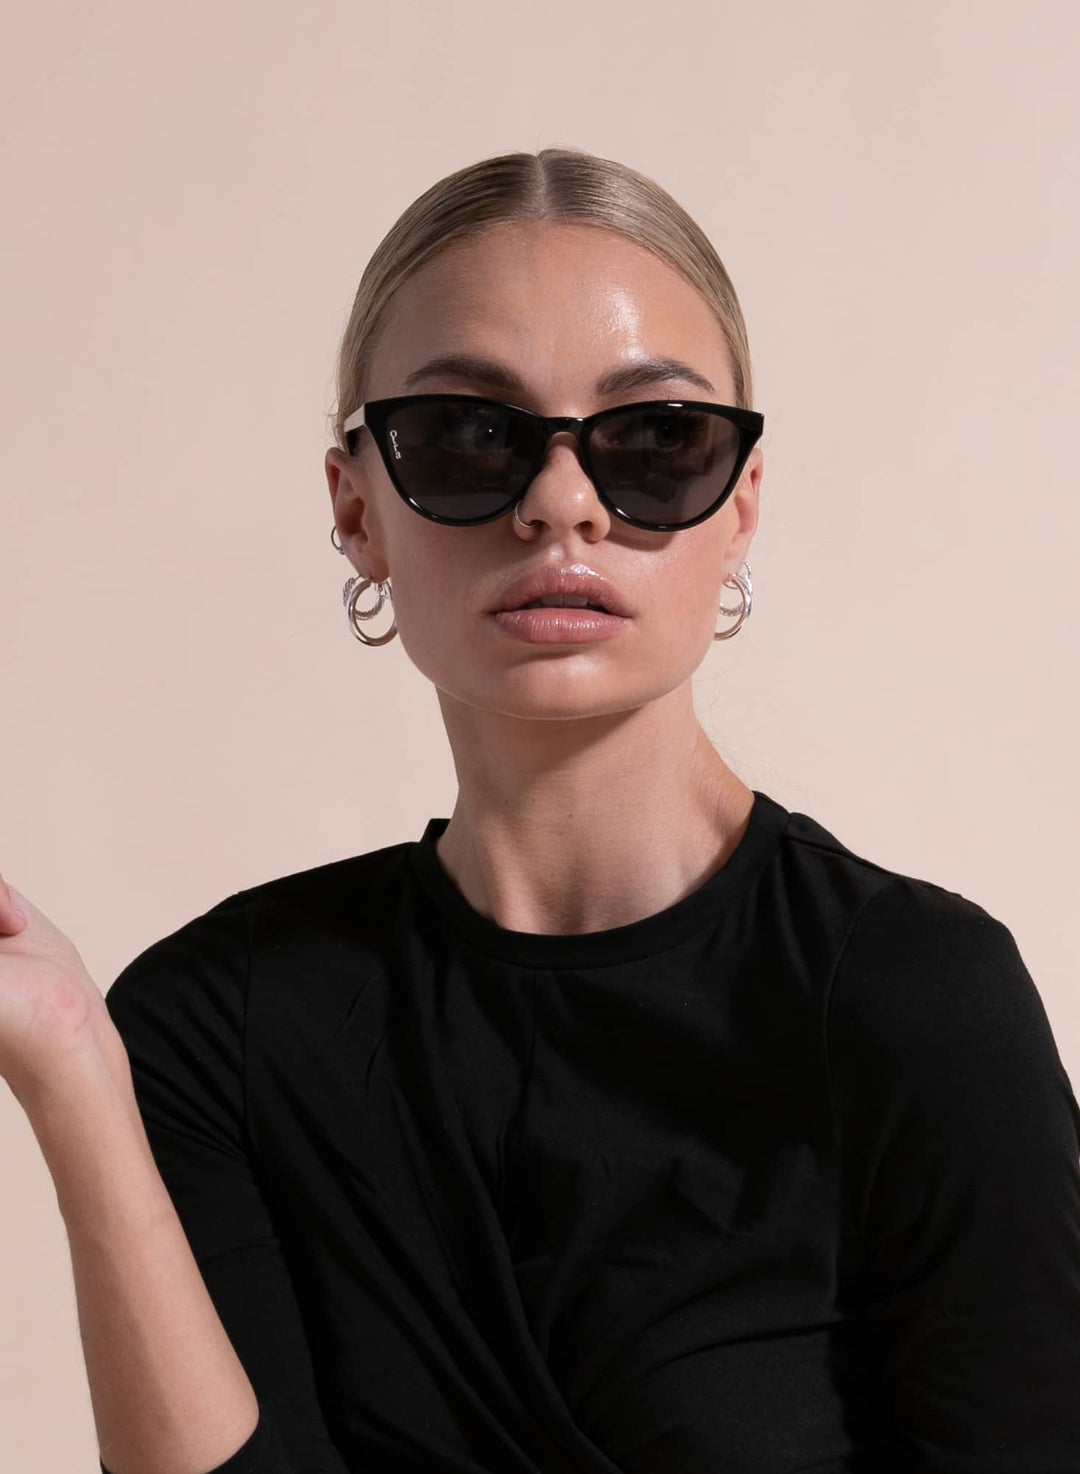 Otra Eyewear - Chika Sunglasses in Black